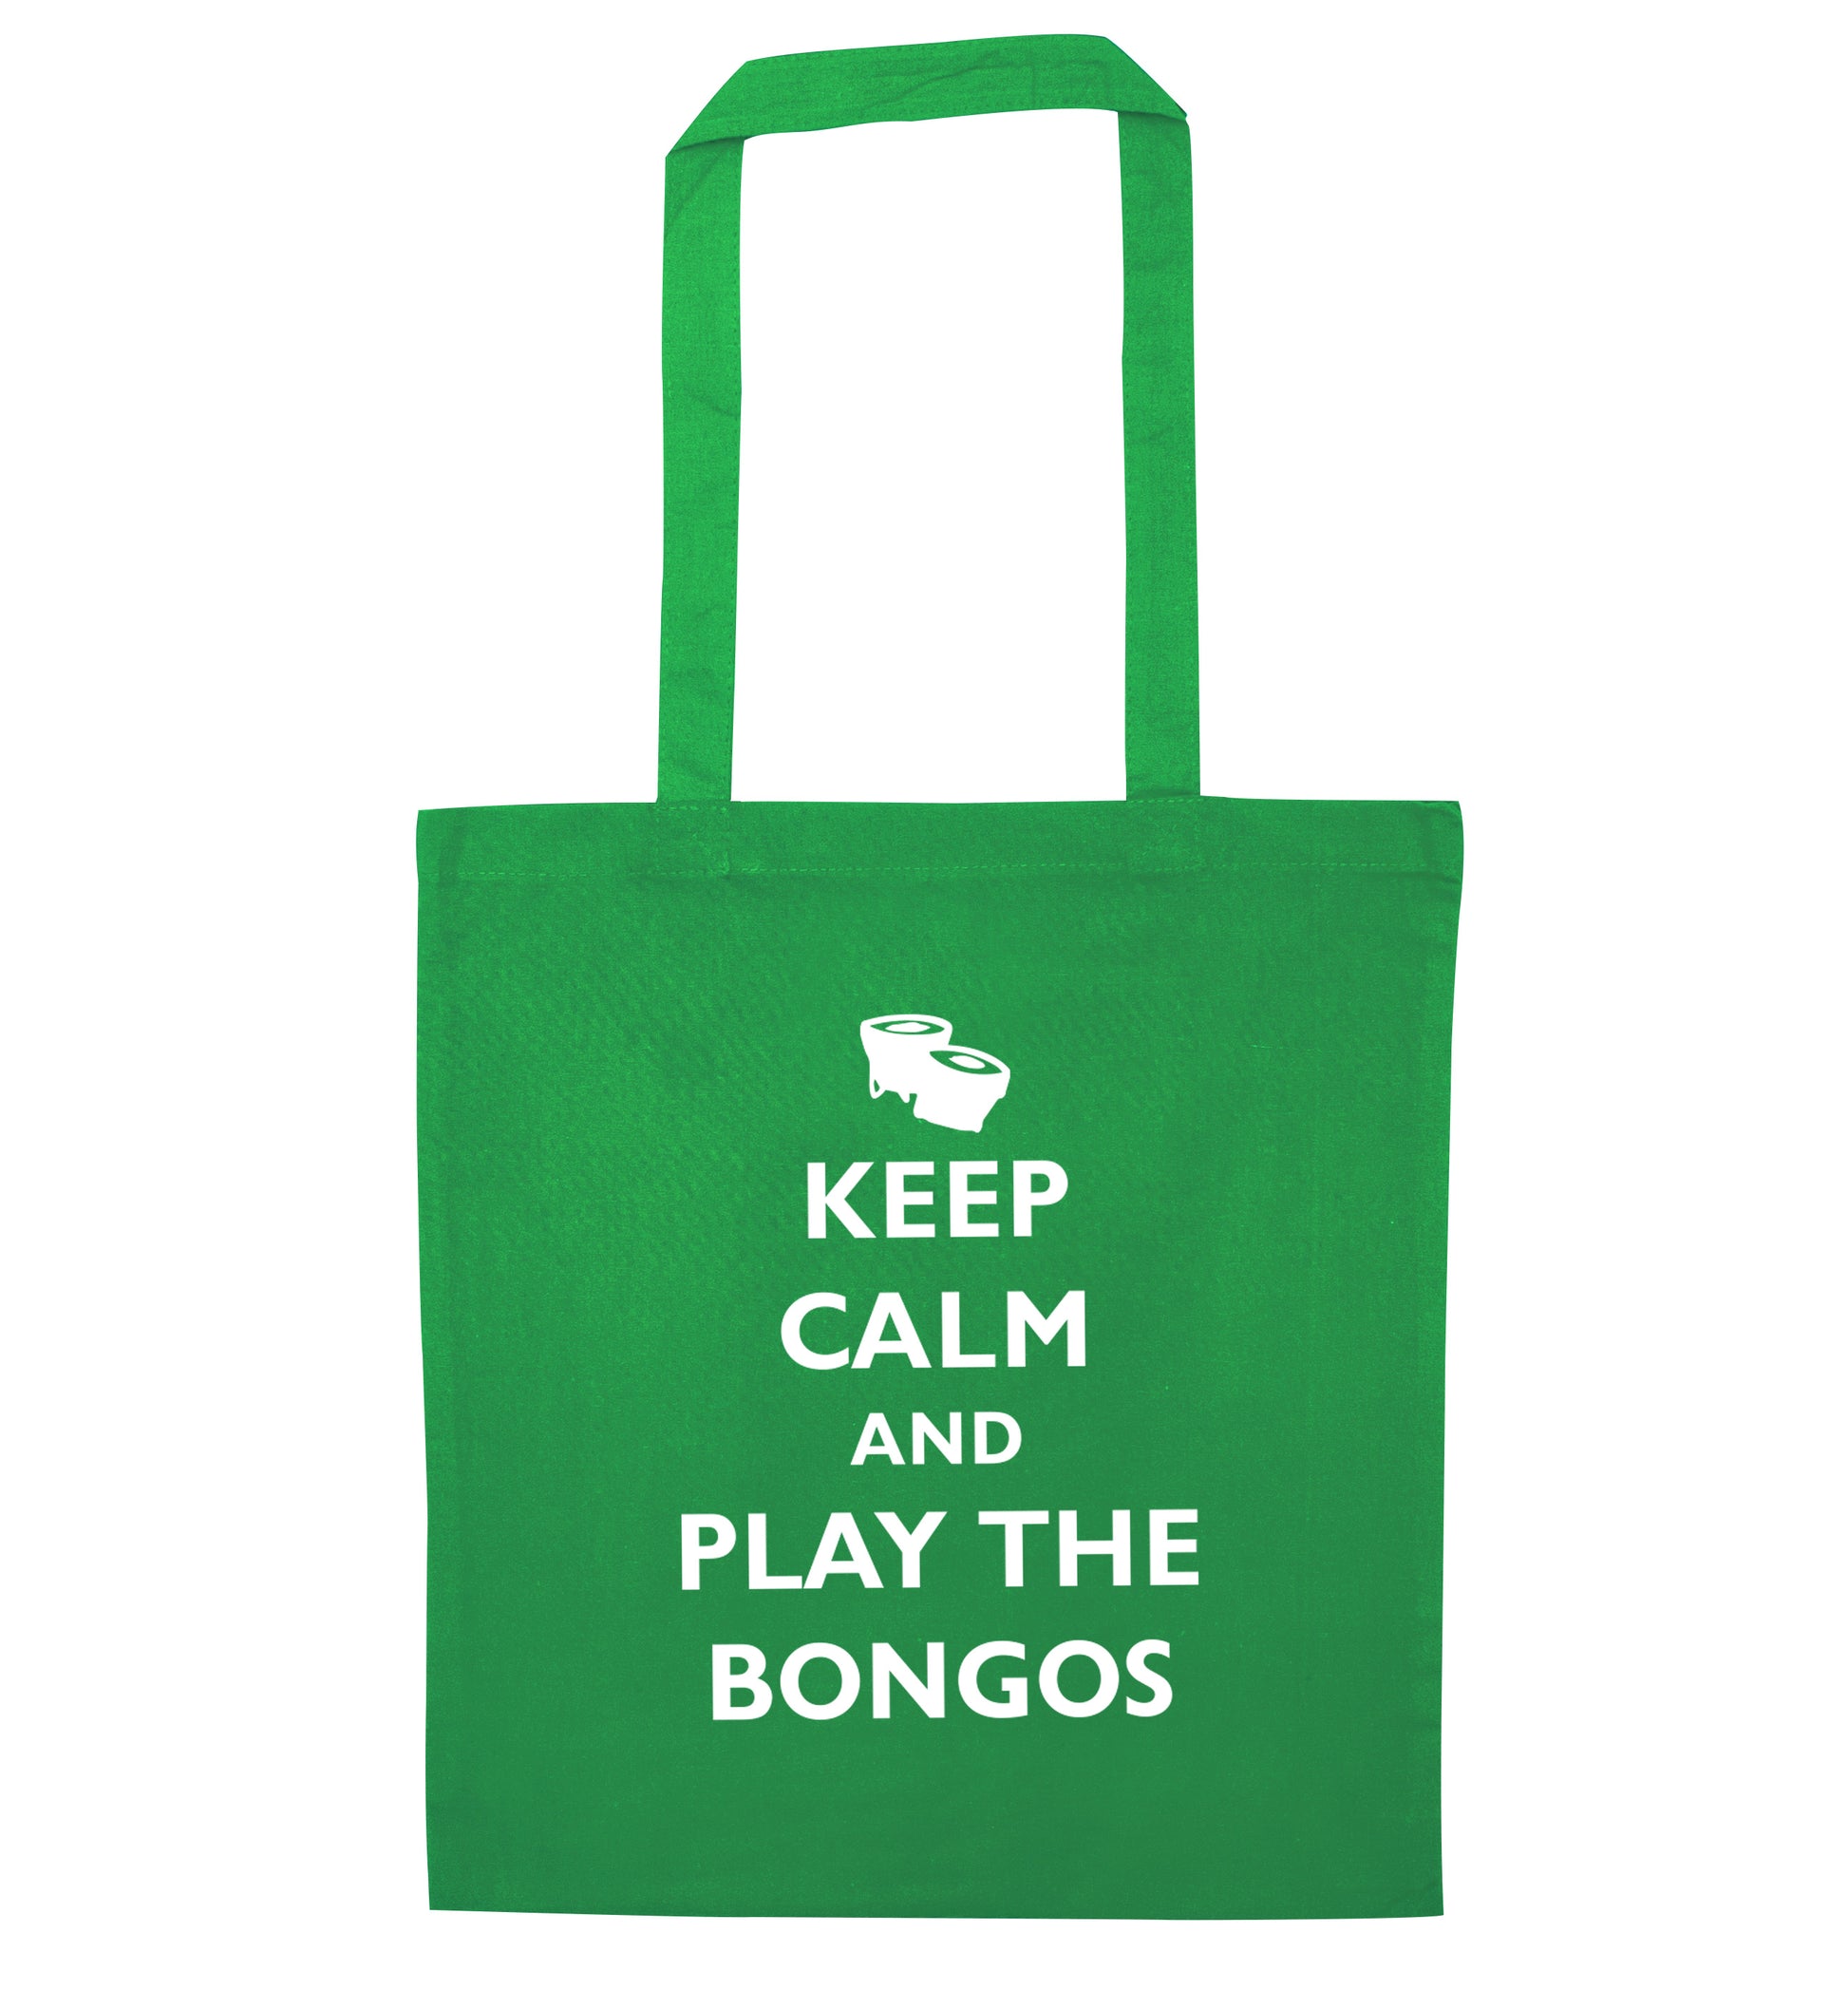 Keep calm and play the bongos green tote bag